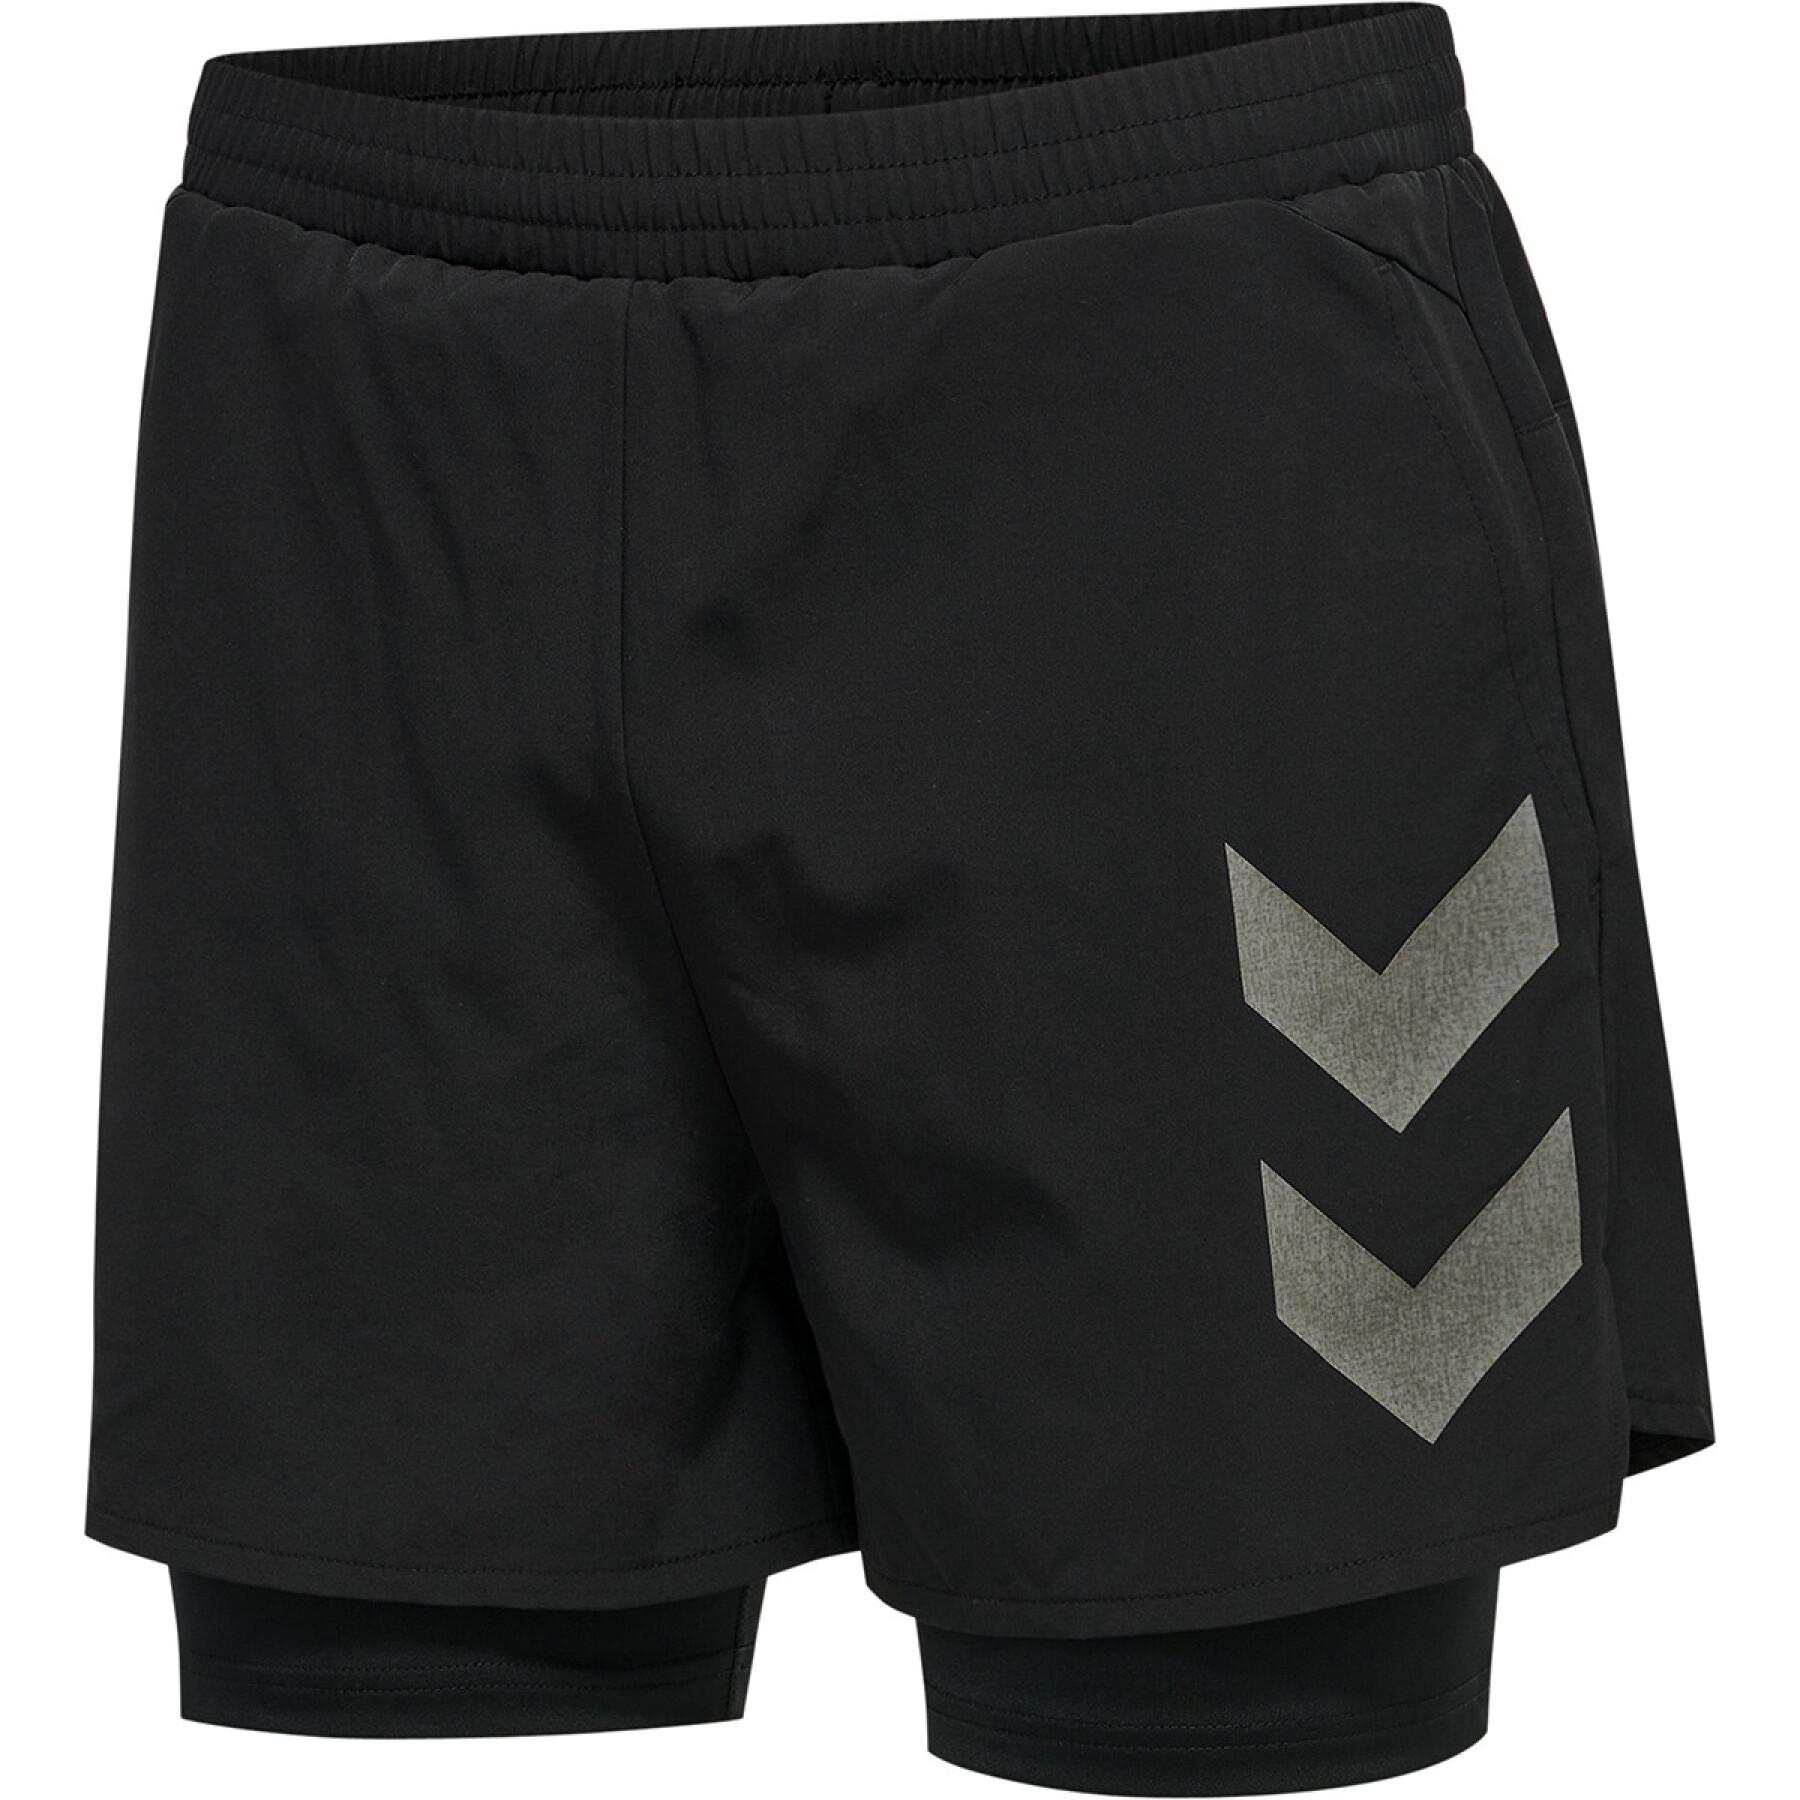 Lined shorts Hummel hmlcolton